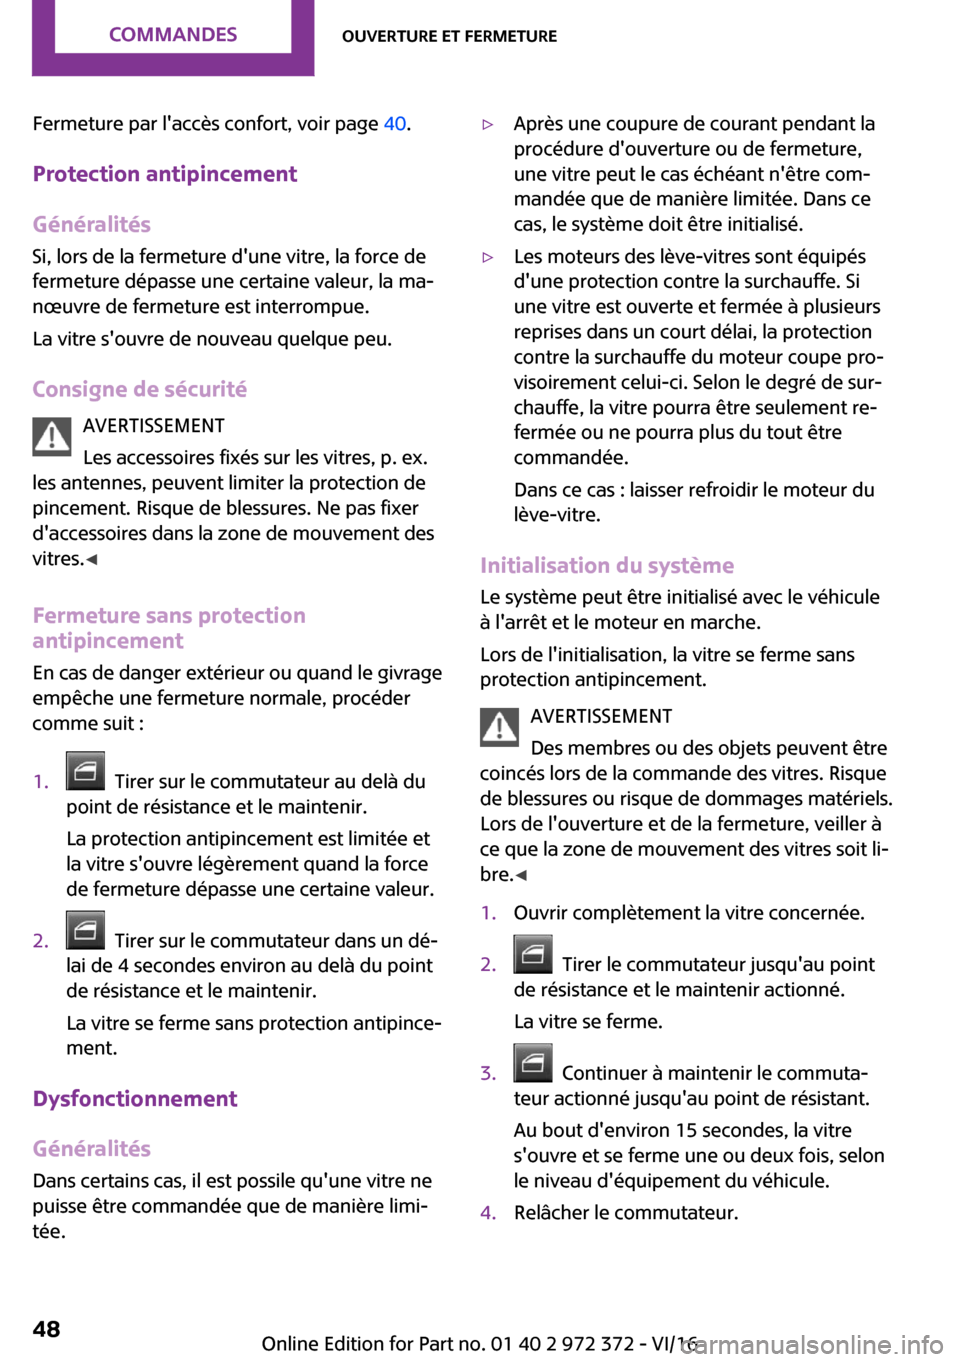 MINI Convertible 2016  Manuel du propriétaire (in French) �F�e�r�m�e�t�u�r�e� �p�a�r� �l��a�c�c�è�s� �c�o�n�f�o�r�t�,� �v�o�i�r� �p�a�g�e� �4�0�.
�P�r�o�t�e�c�t�i�o�n��a�n�t�i�p�i�n�c�e�m�e�n�t
�G�é�n�é�r�a�l�i�t�é�s �S�i�,� �l�o�r�s� �d�e� �l�a� �f�e�